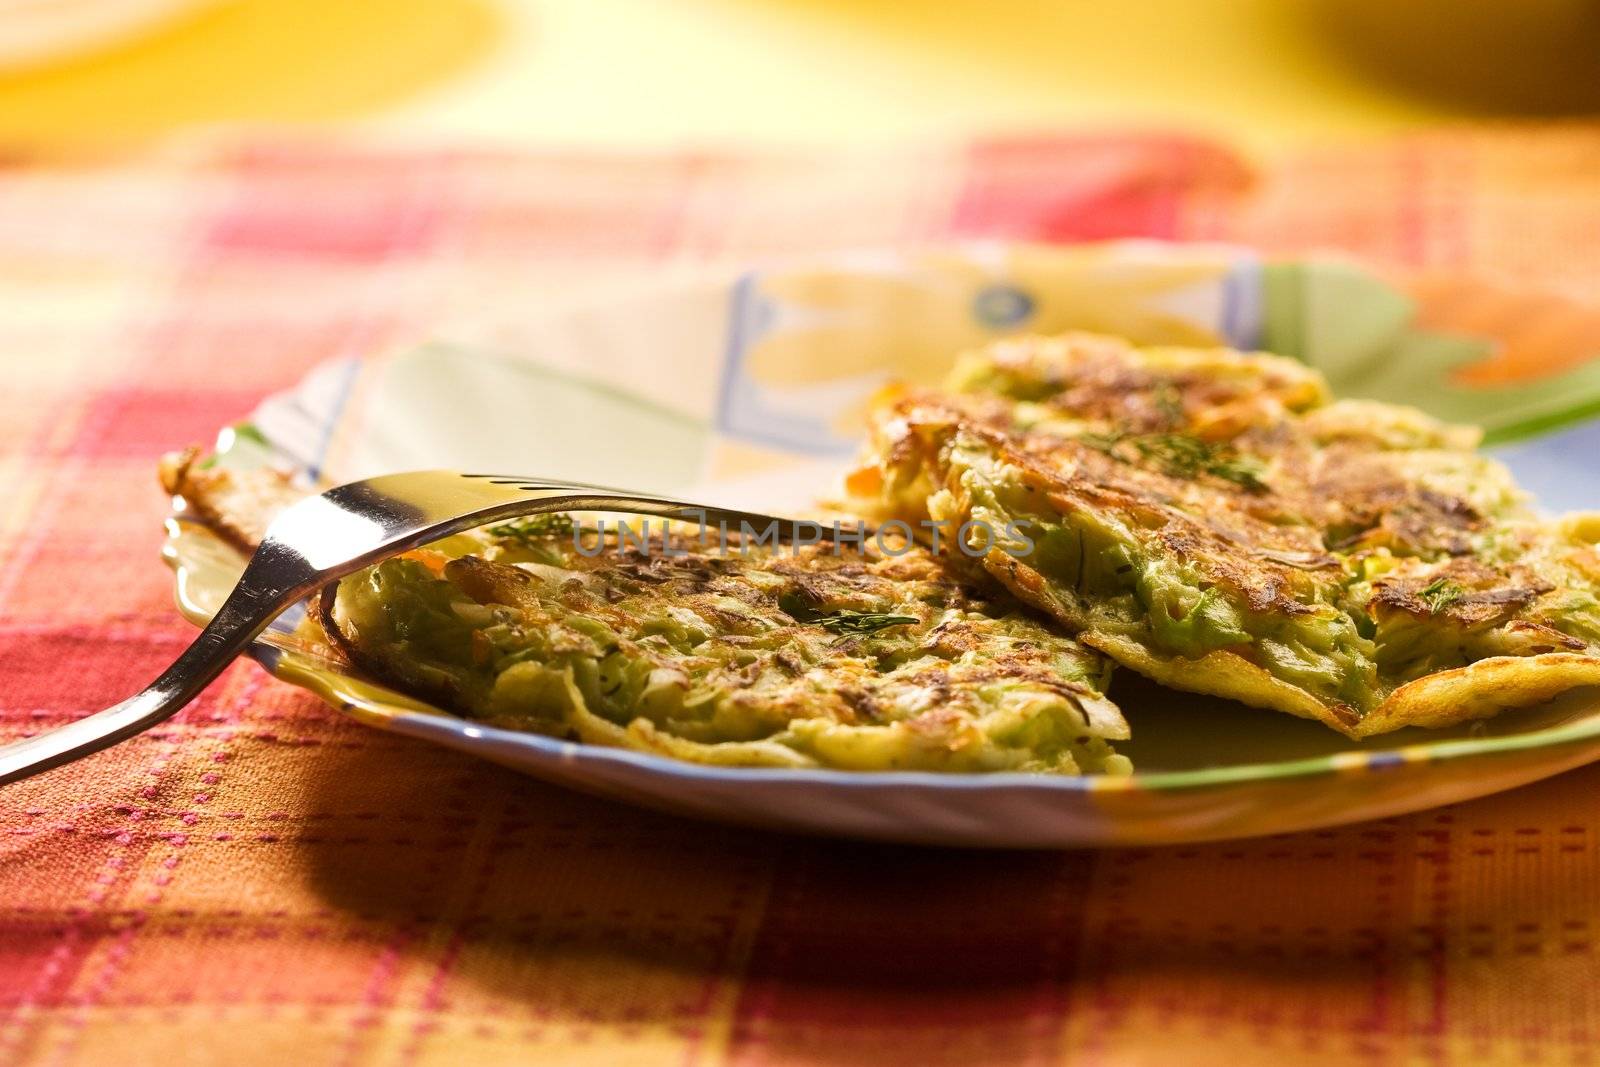 food serias: cabbage pancake on the plate